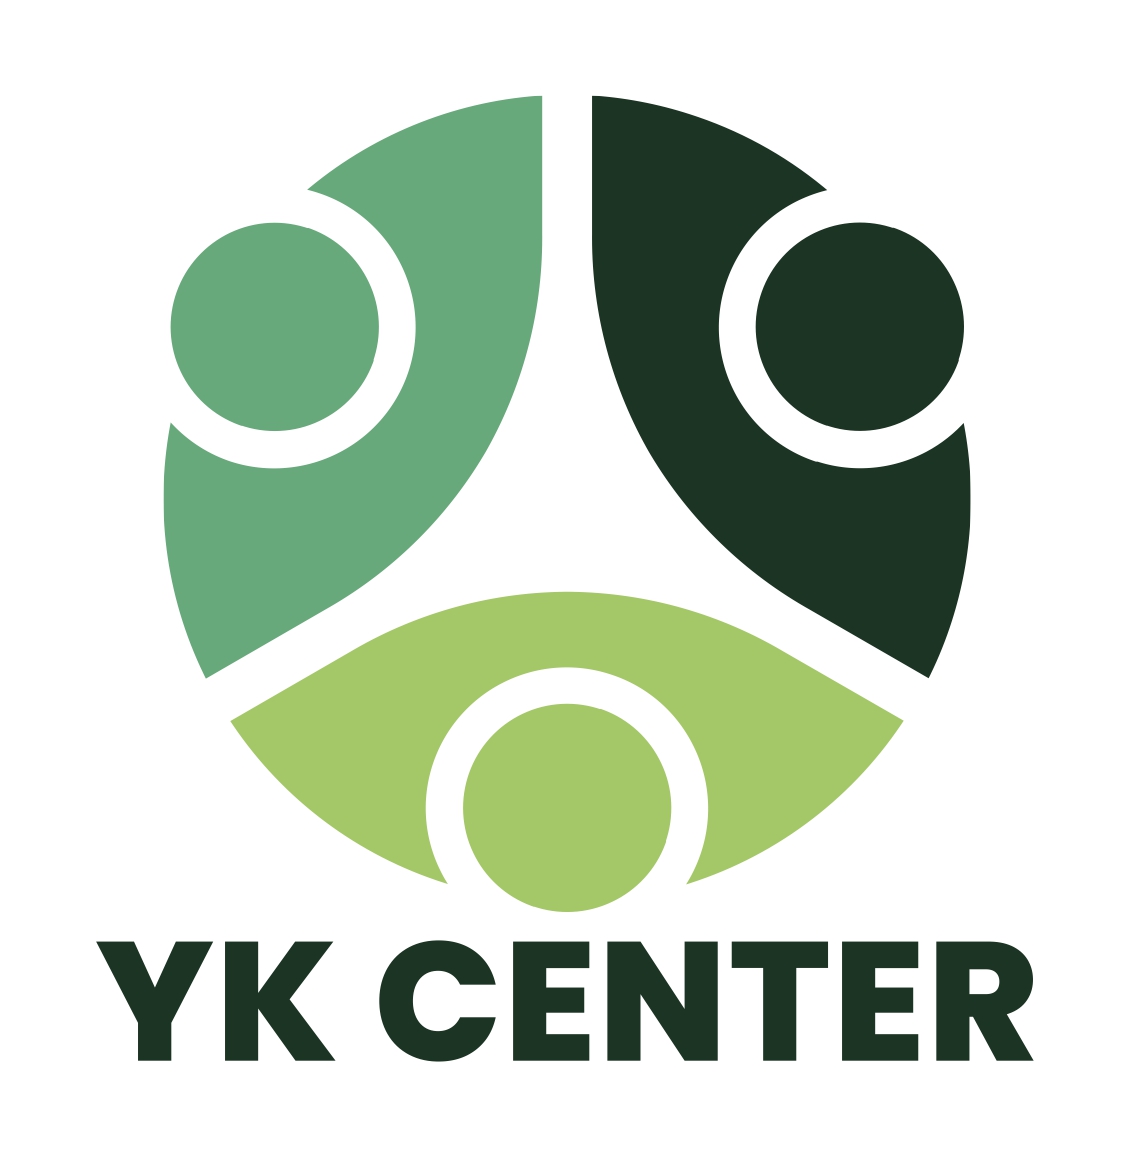 YK CENTER logo